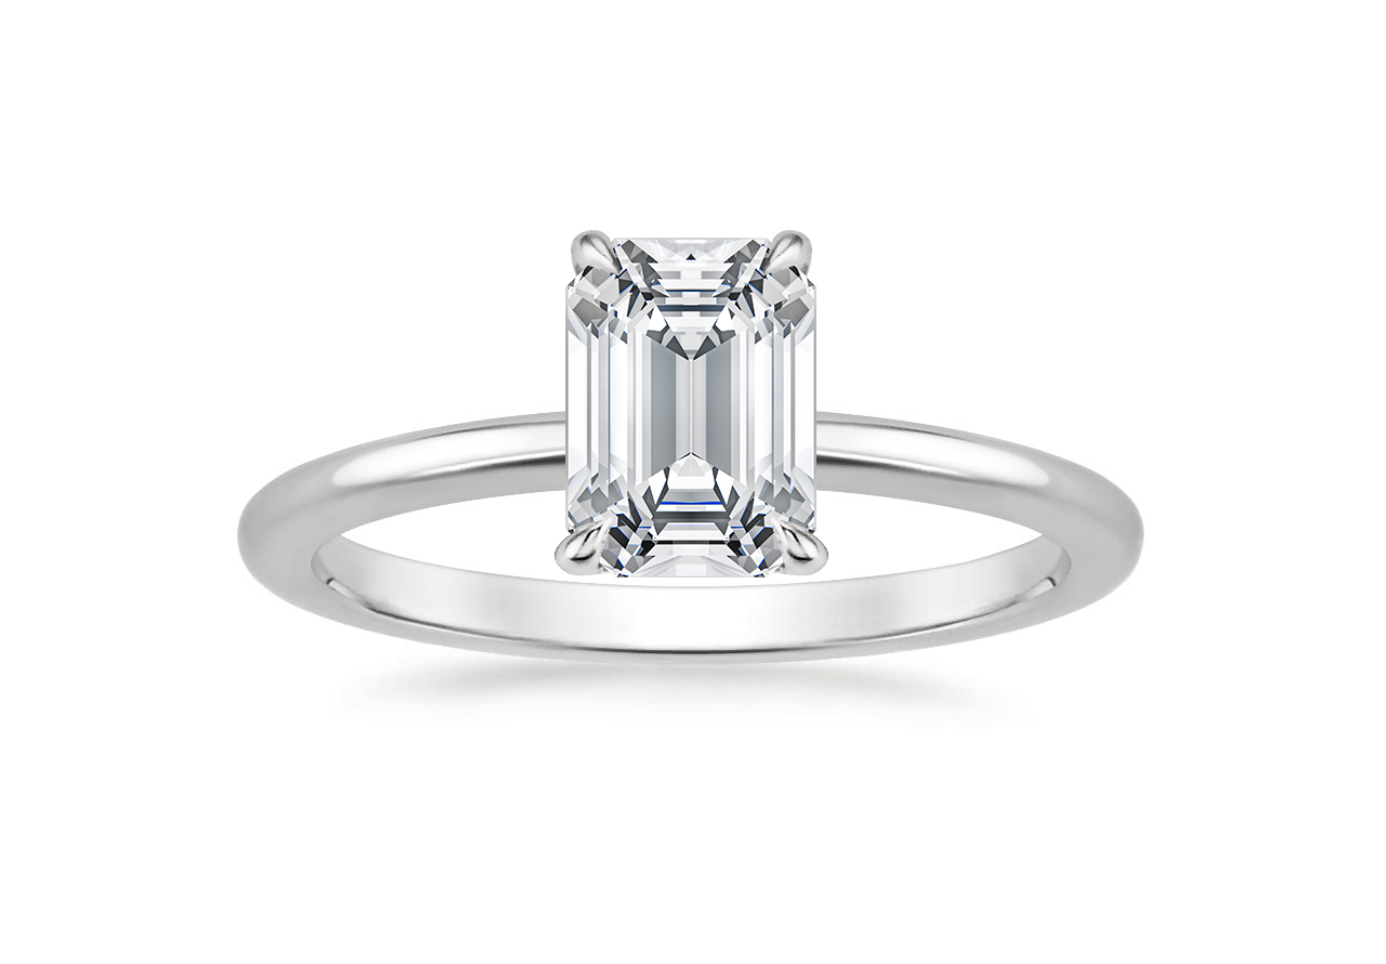 Secret Halo Diamond Engagement Ring